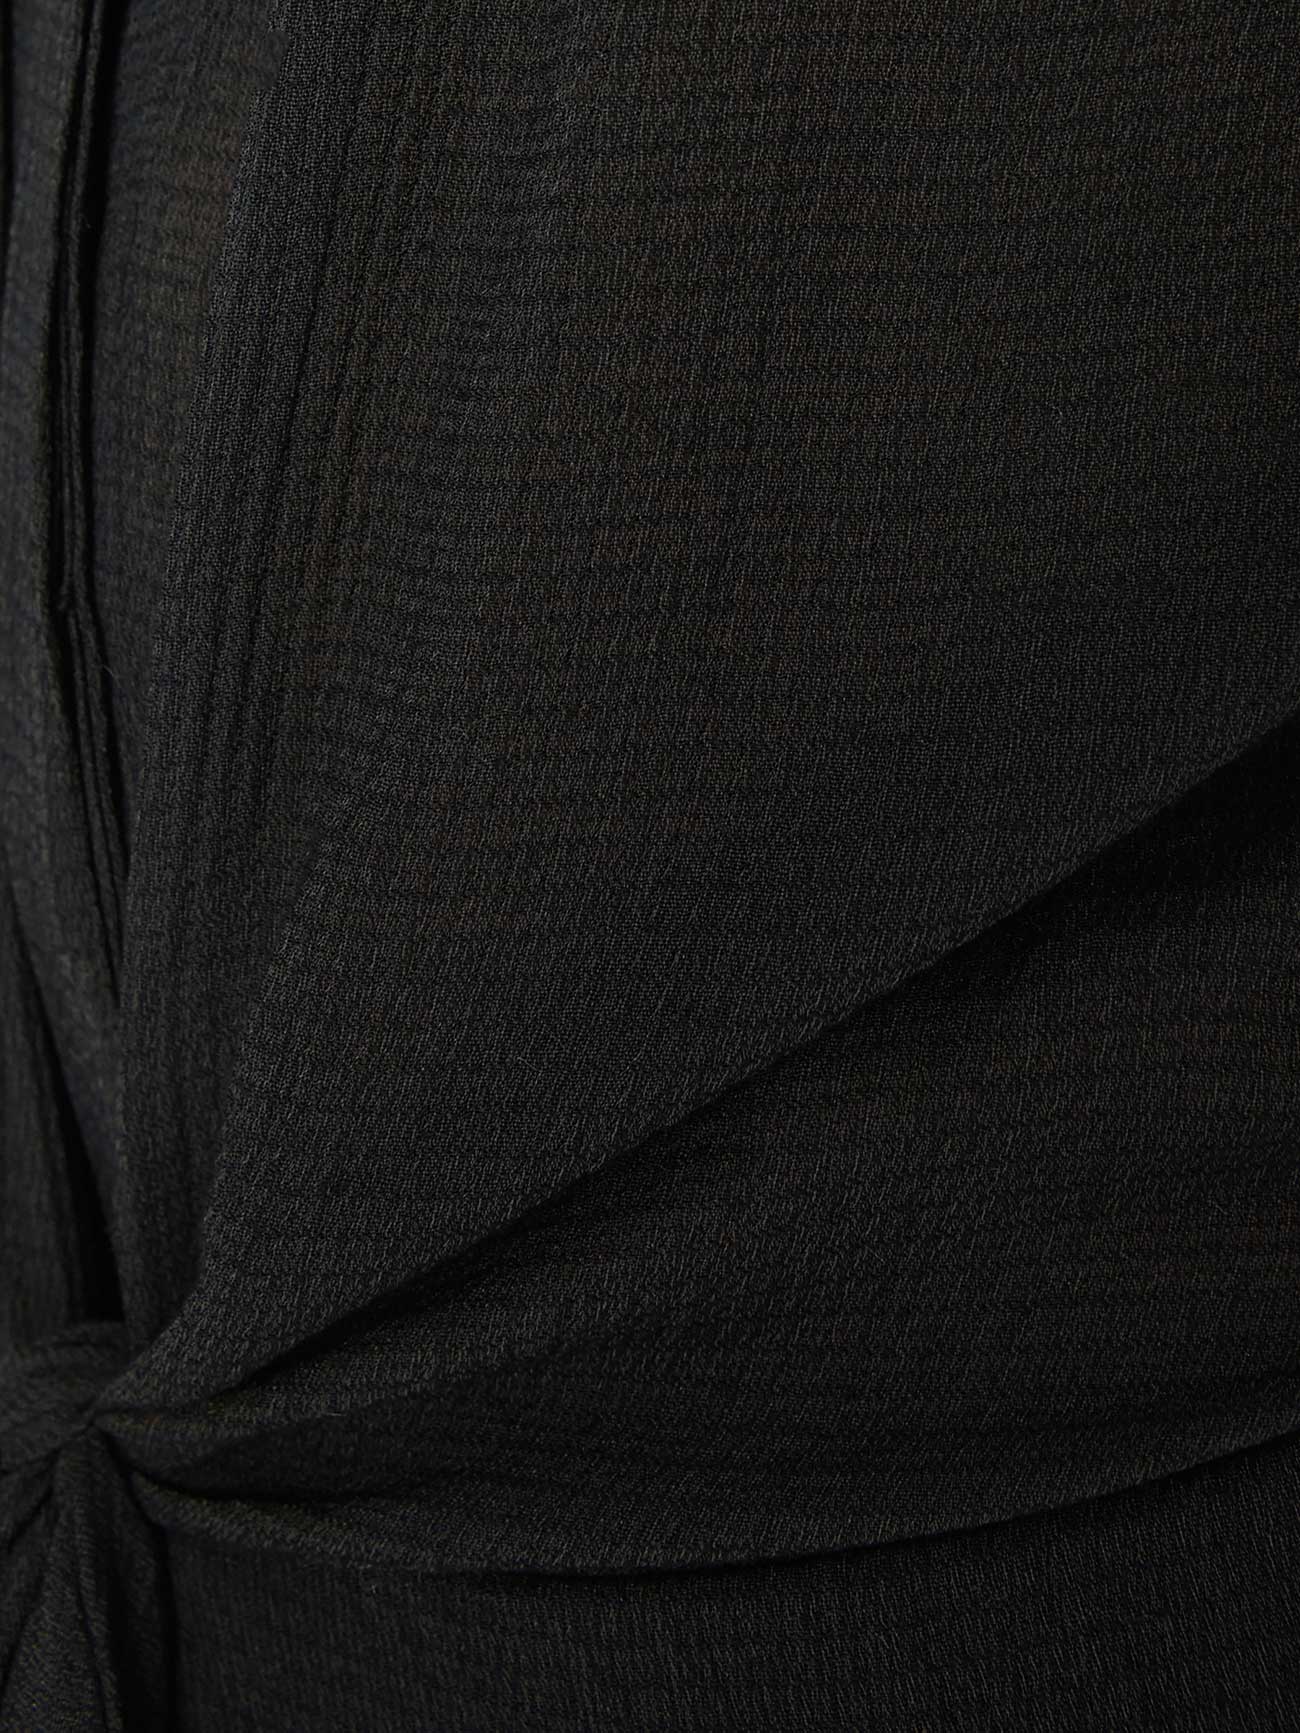 Madsen maxi sleeveless black dress close up 2